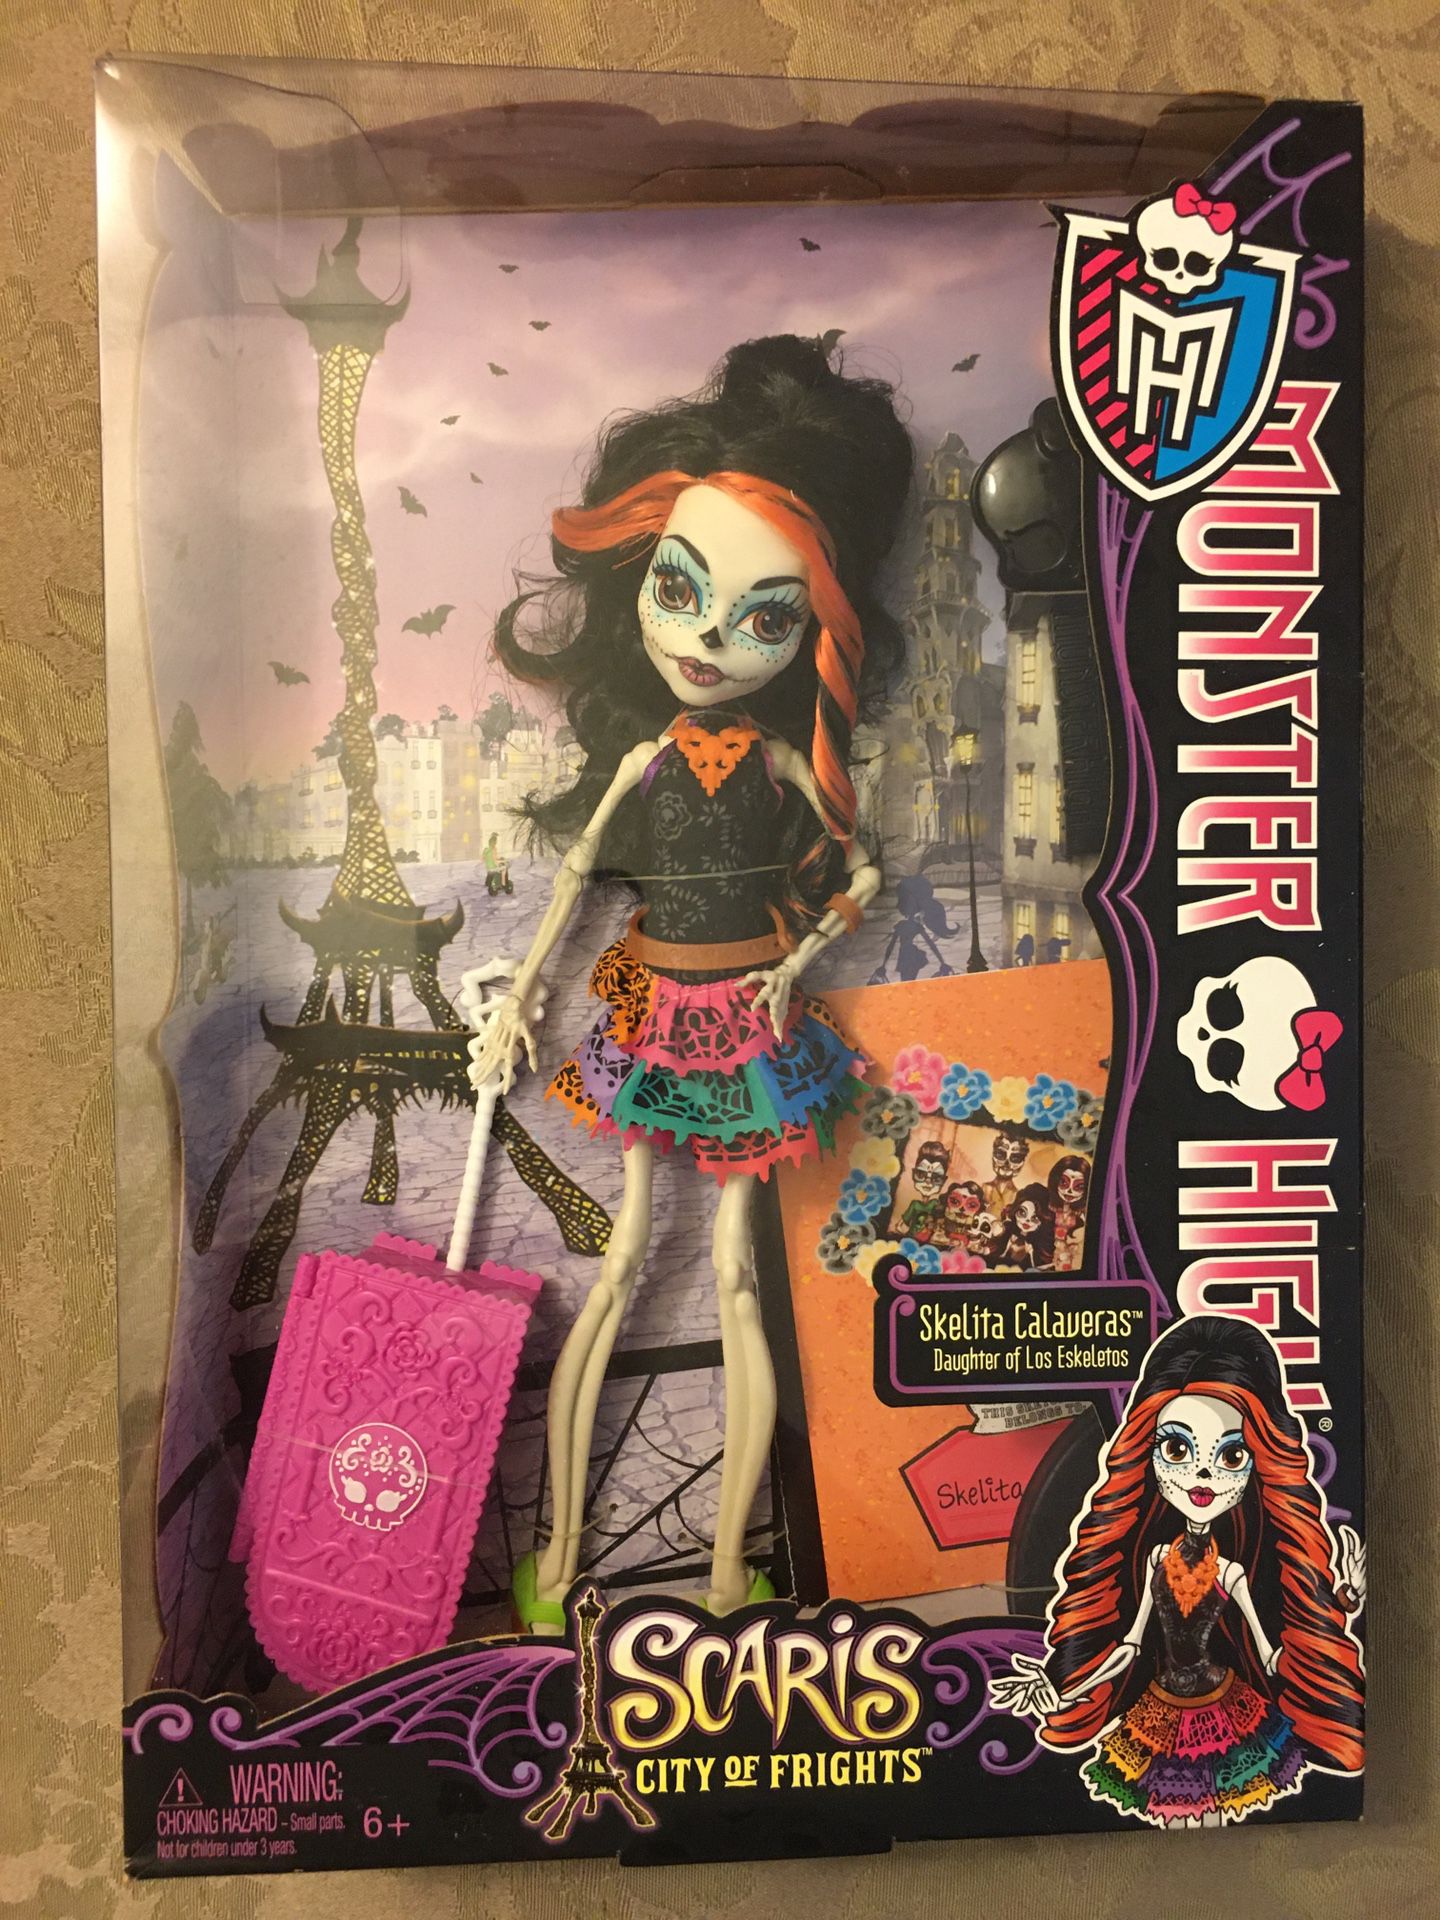 Monster high doll Skelita Calaveras scaris city of frights sugar skull candy skeleton